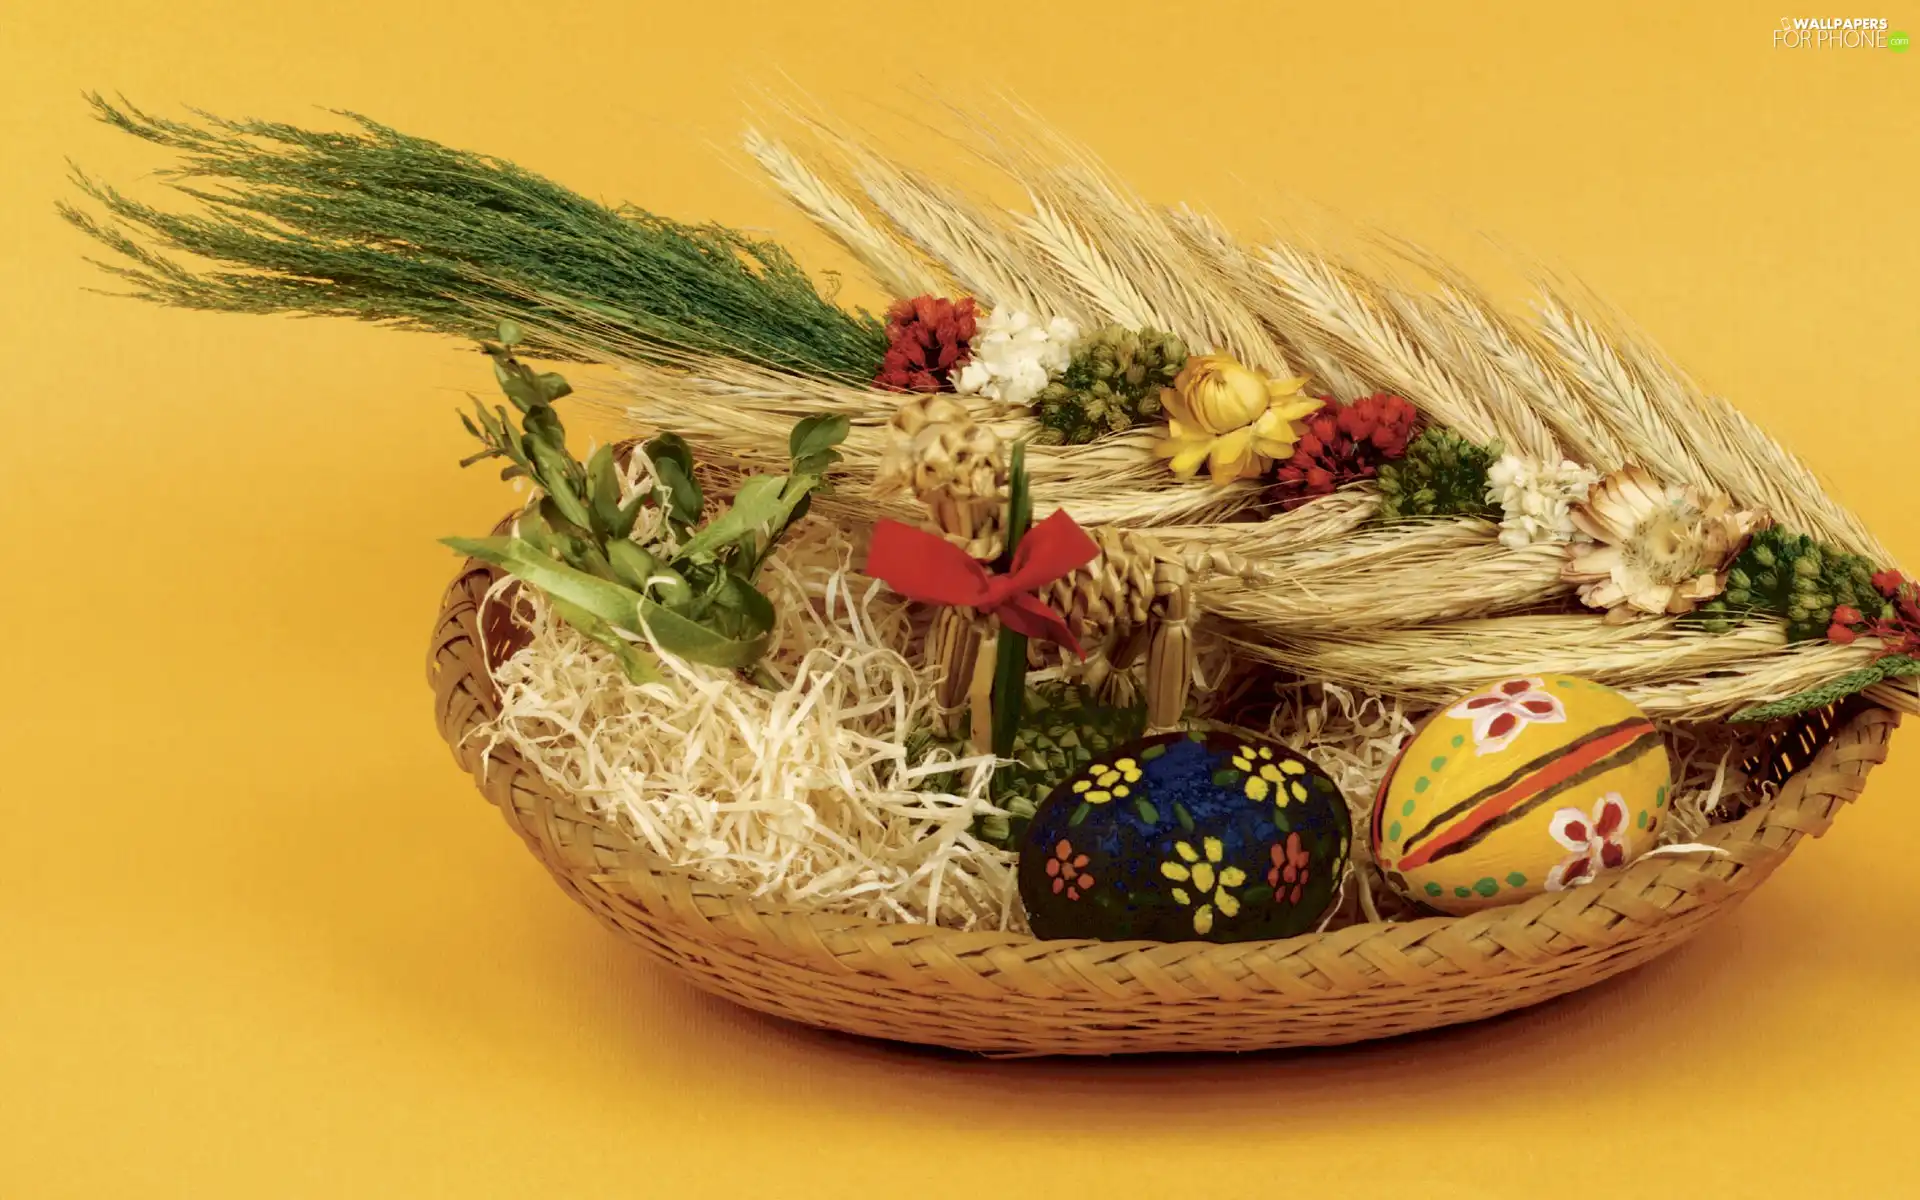 Palm, basket, eggs